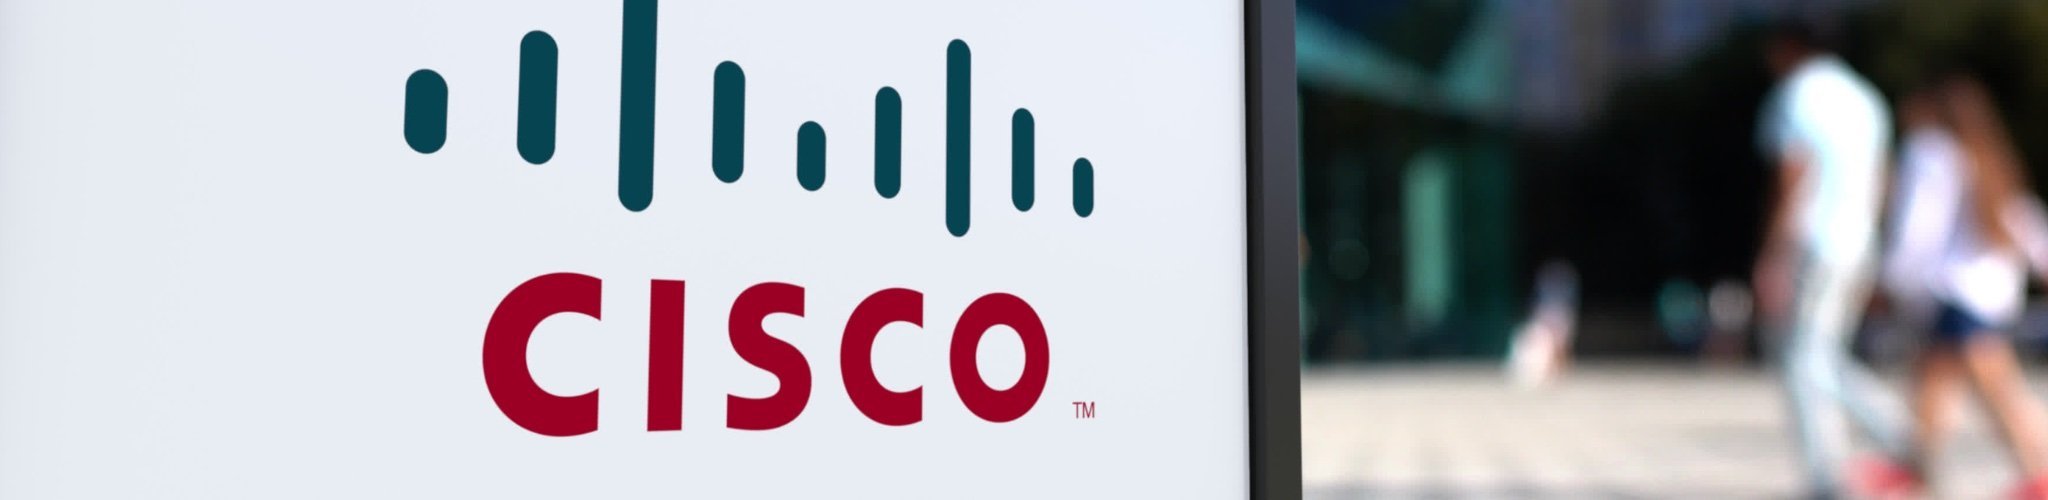 Cisco is simplifying their security portfolio with SecureX